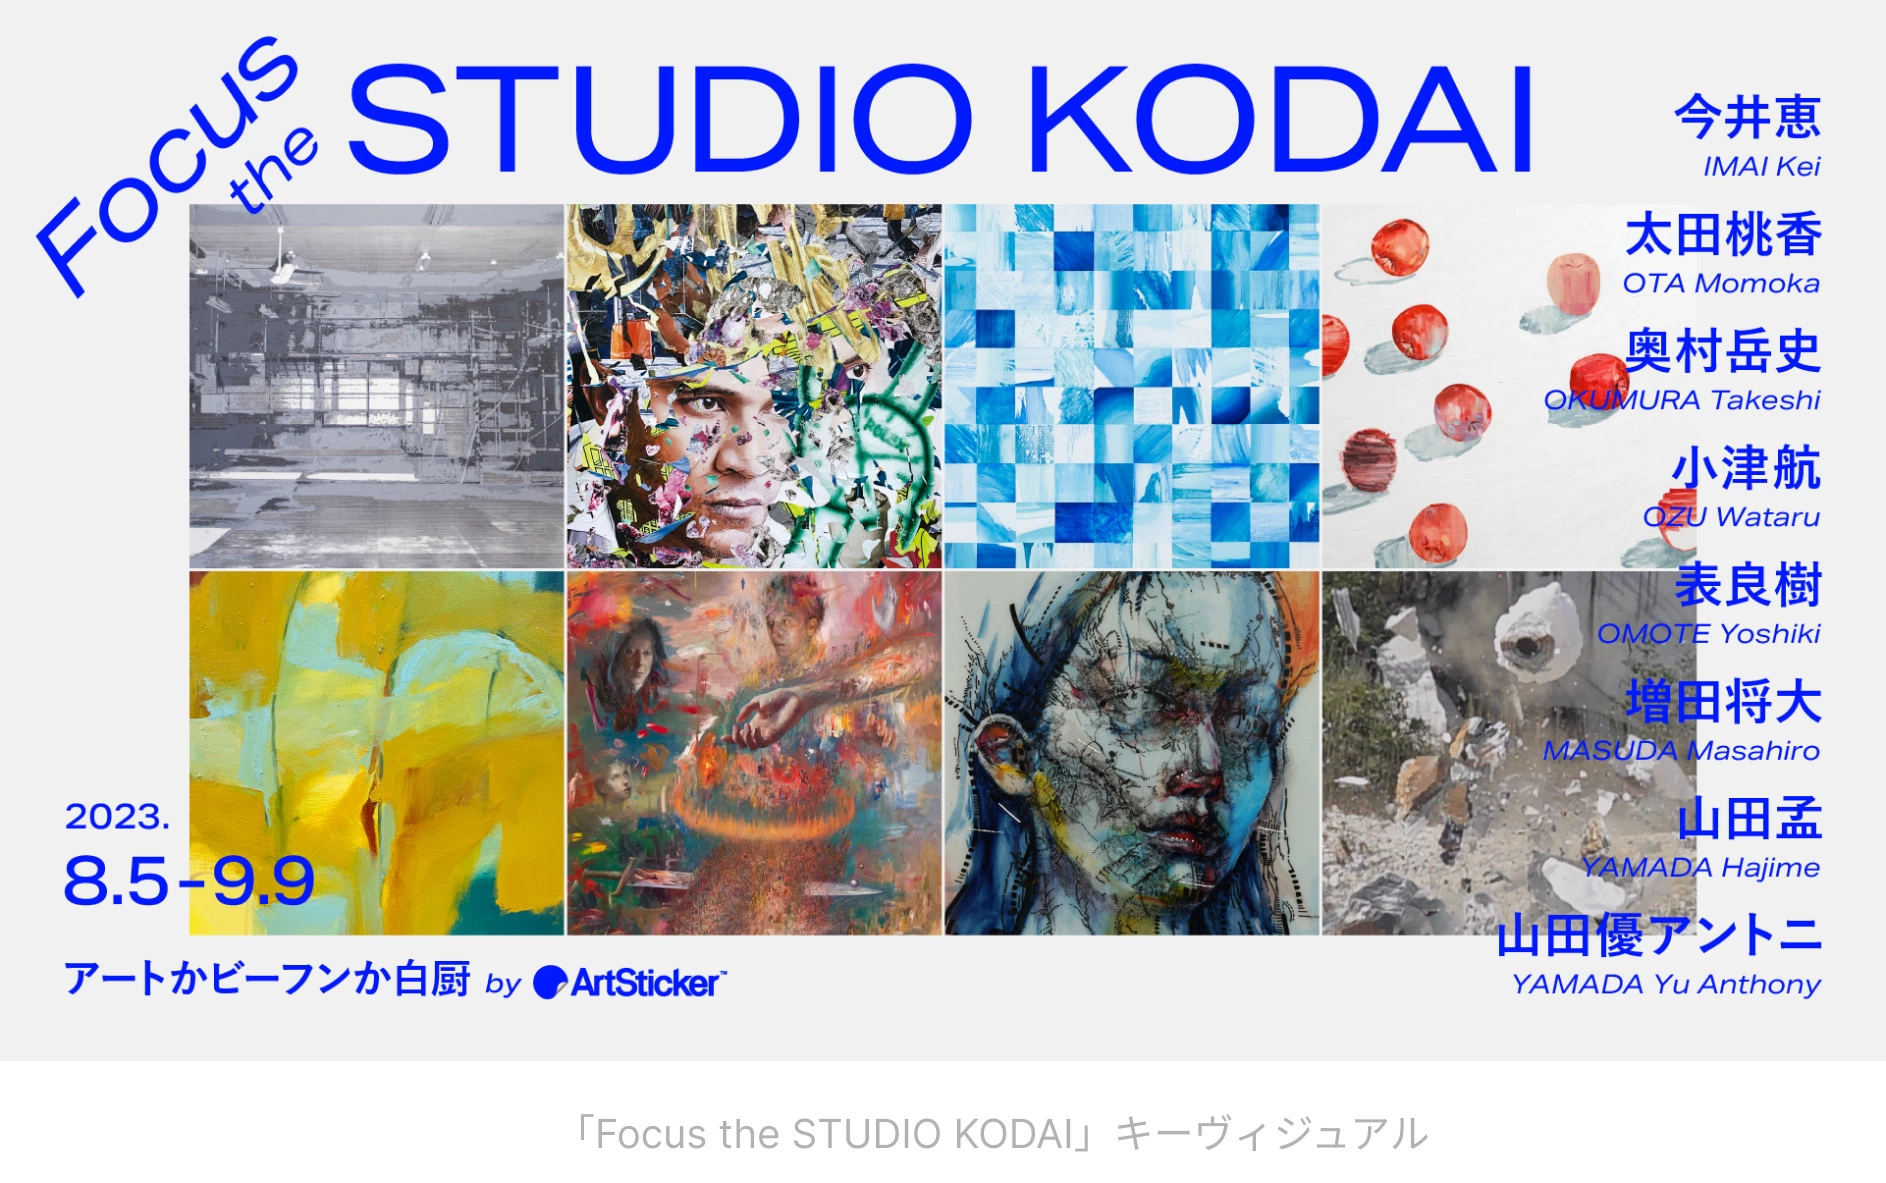 Focus the STUDIO KODAI